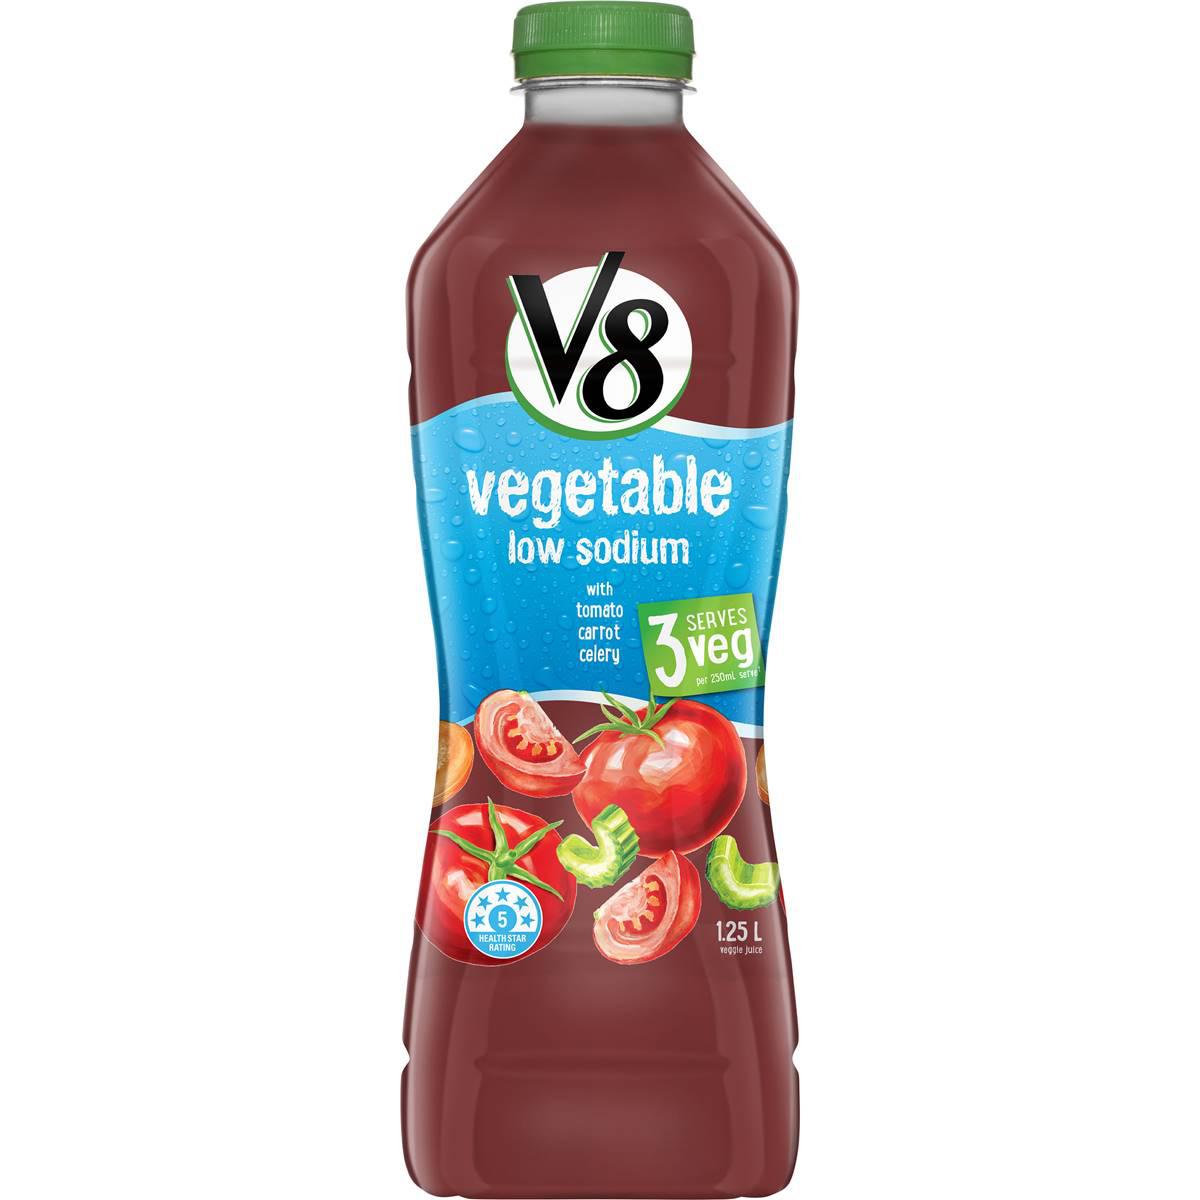 V8 Vegetable Juice Low Sodium 1.25l